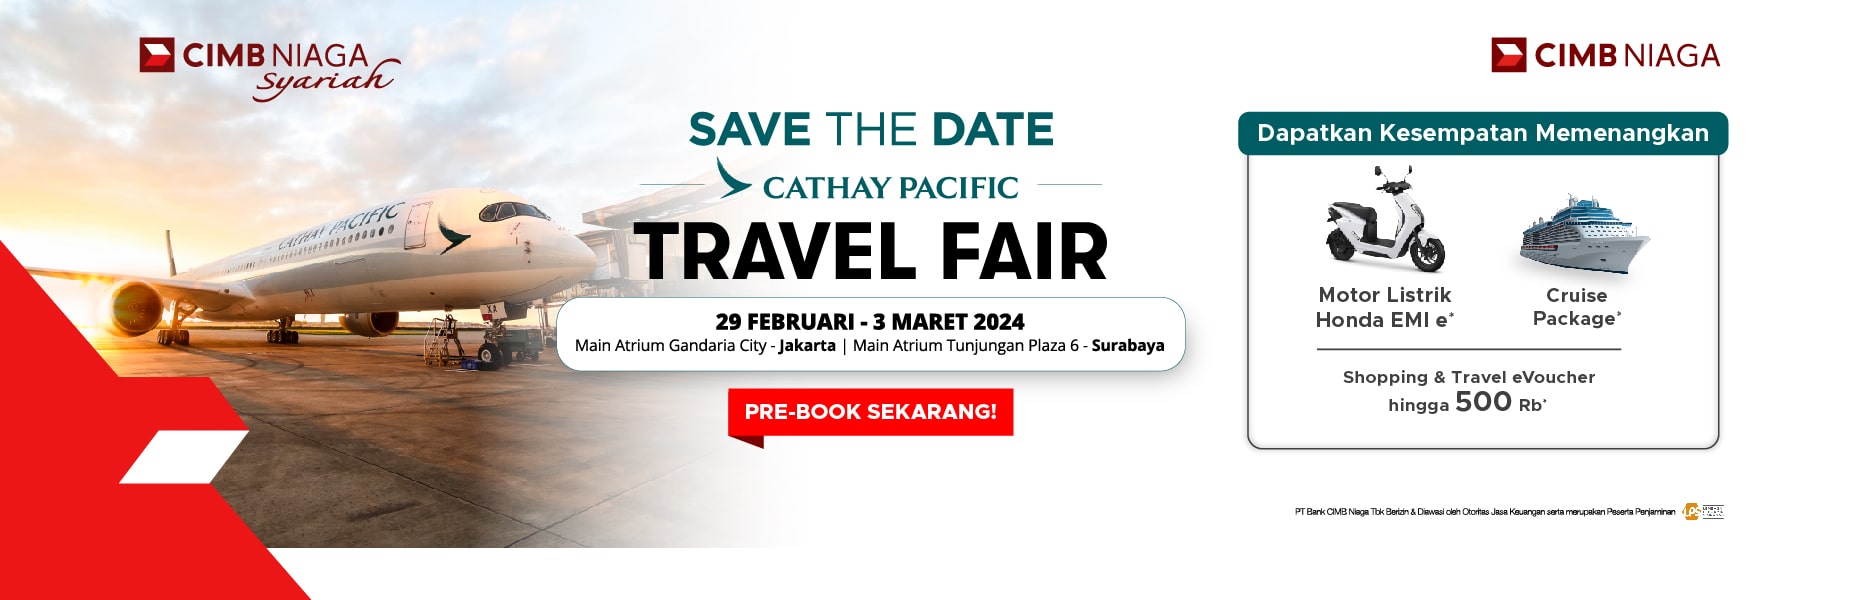 Cathay Pacific Travel Fair